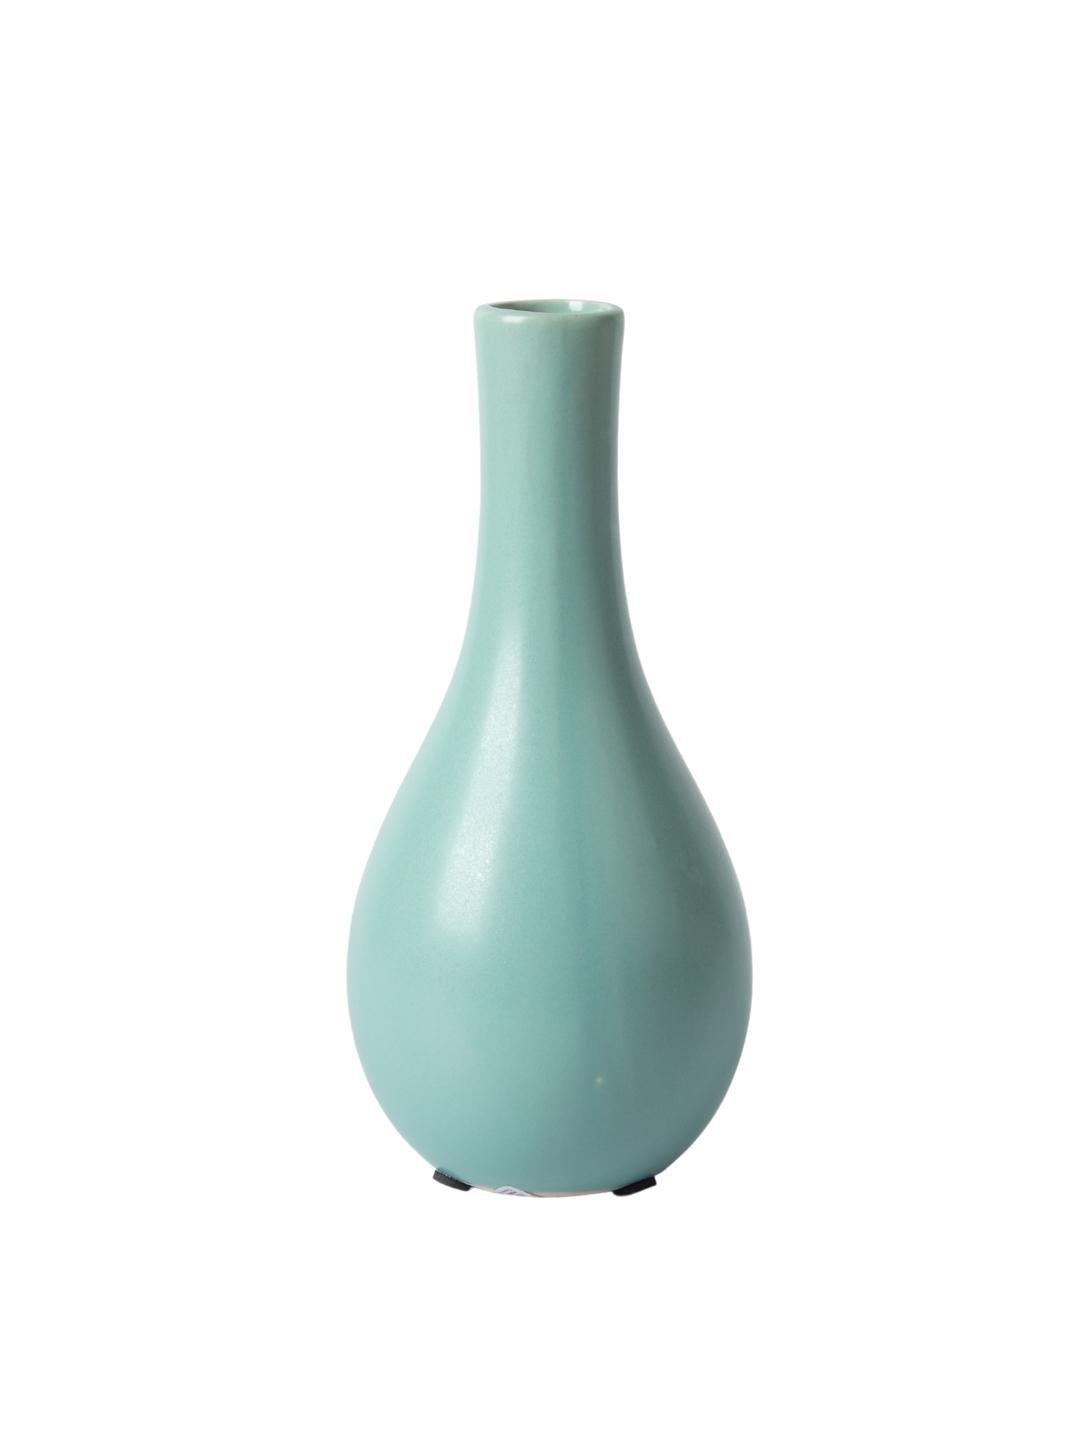 Decorative Ceramic Flower Vase - Green Pear, Glossy